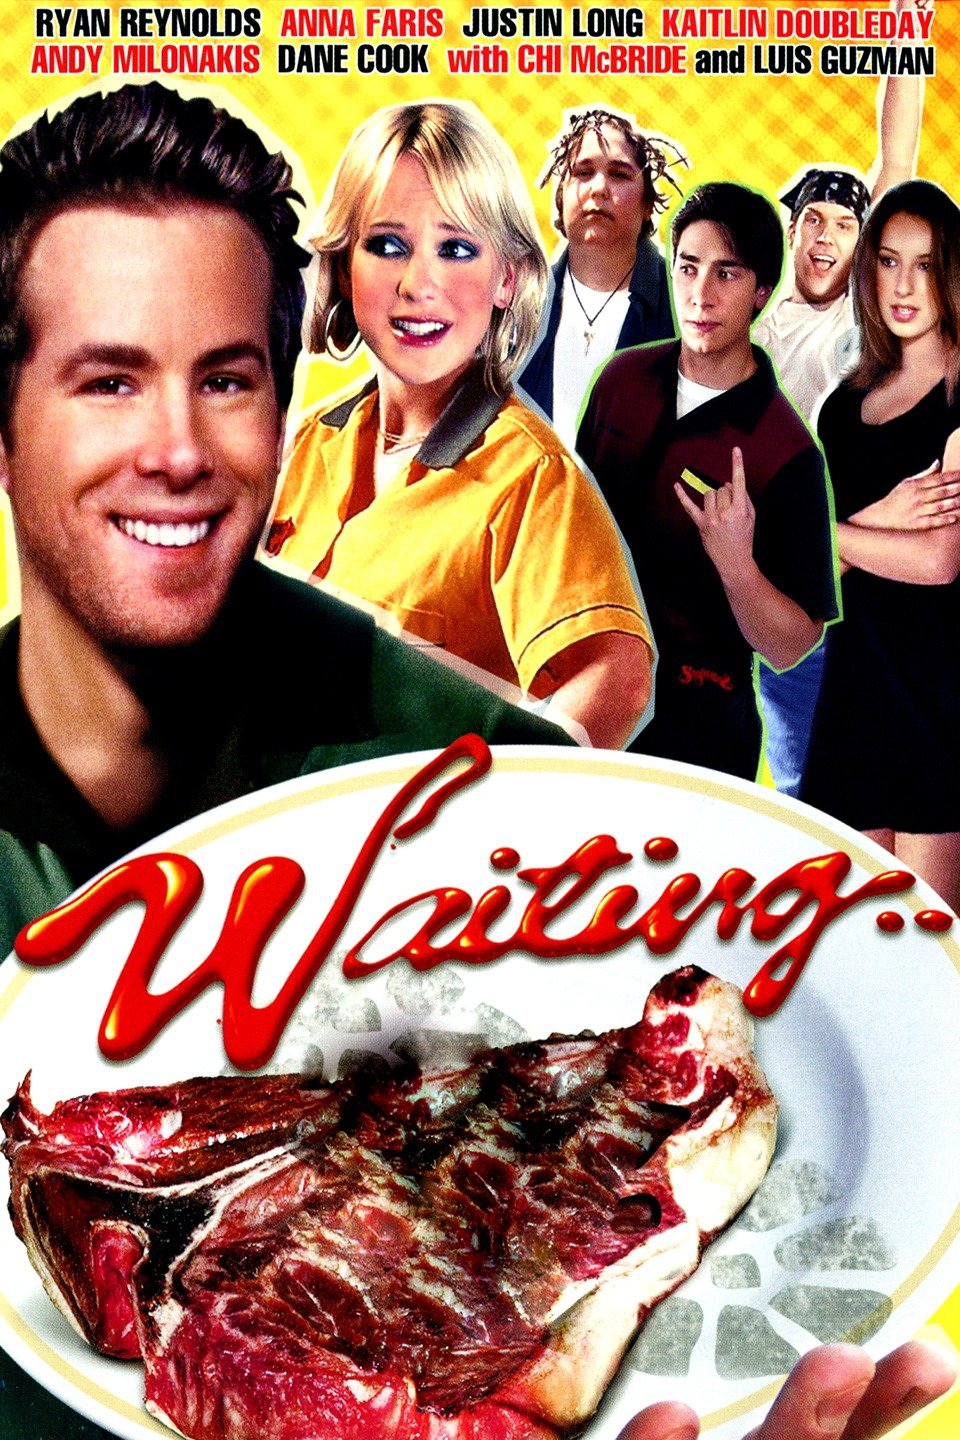 Waiting - Rob McKittrick, Ryan Reynolds, Justin Long 